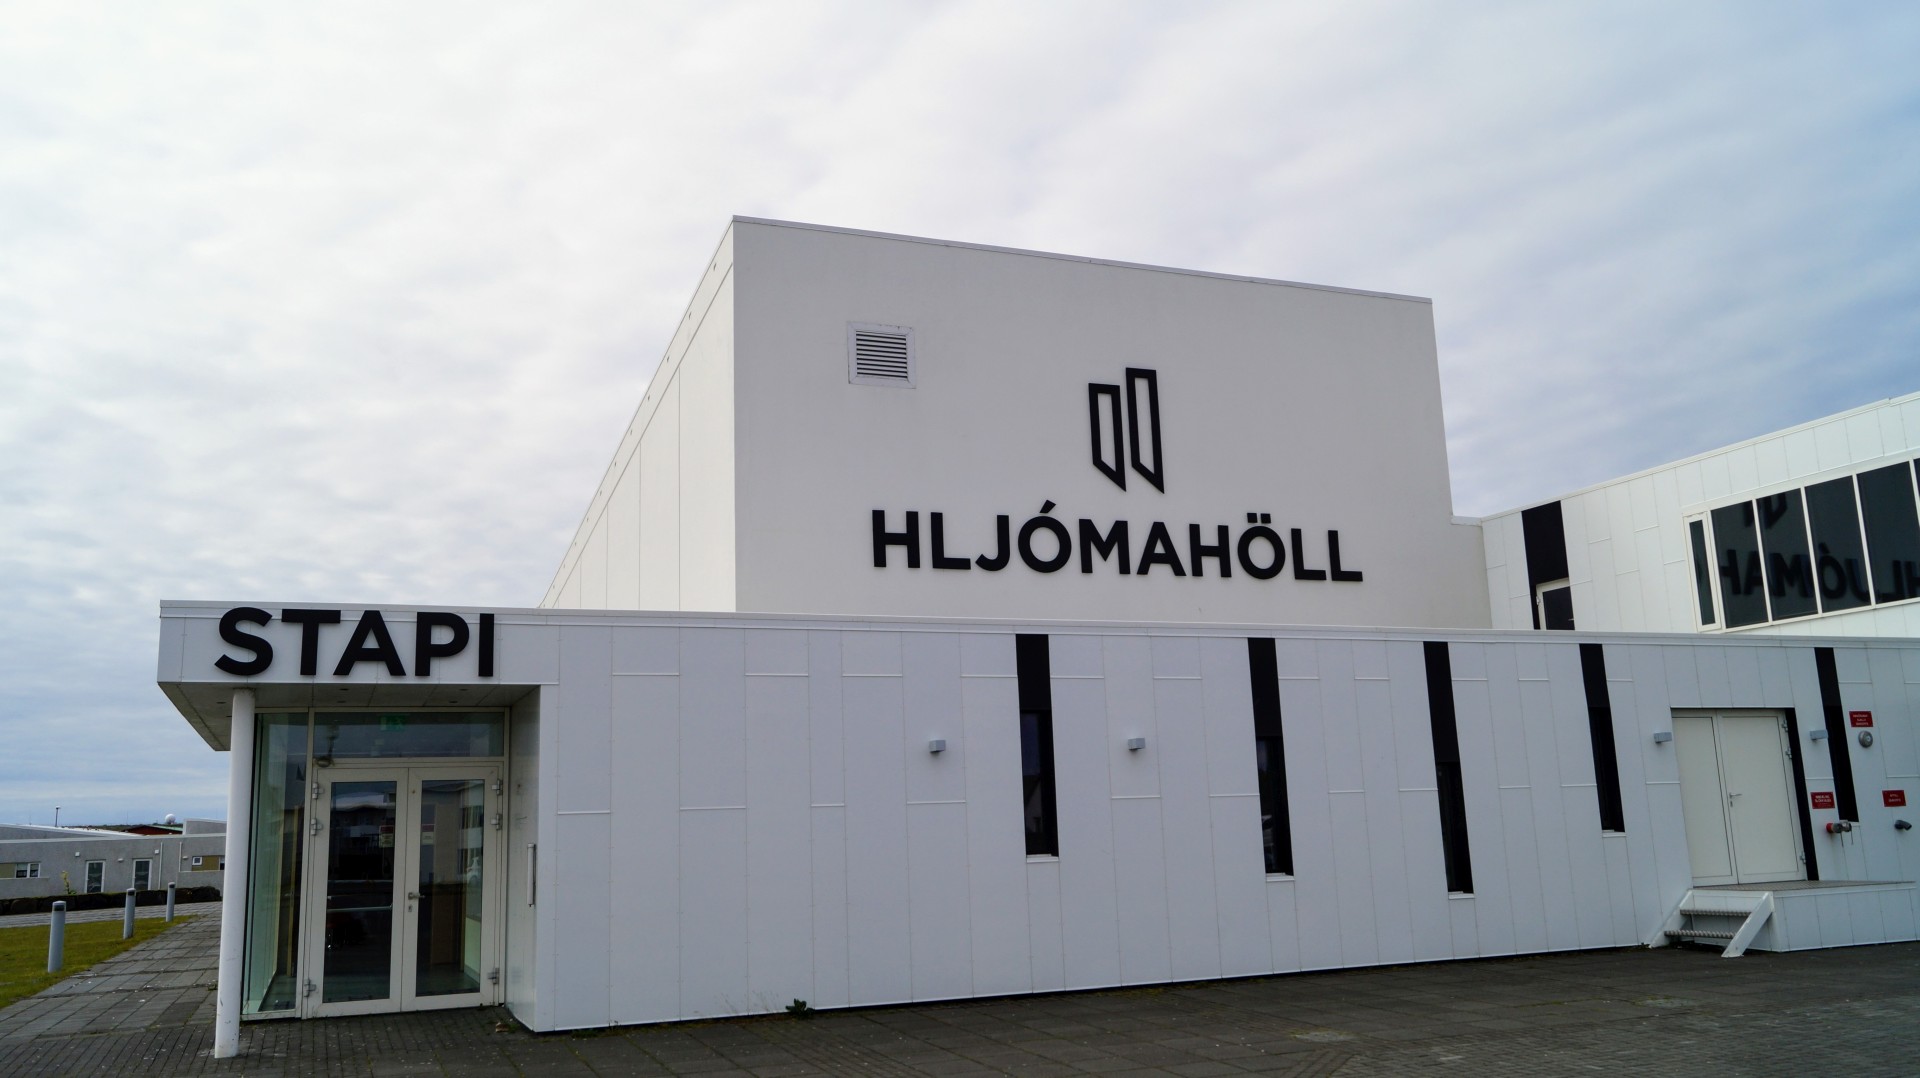 Hljomaholl Exhibition